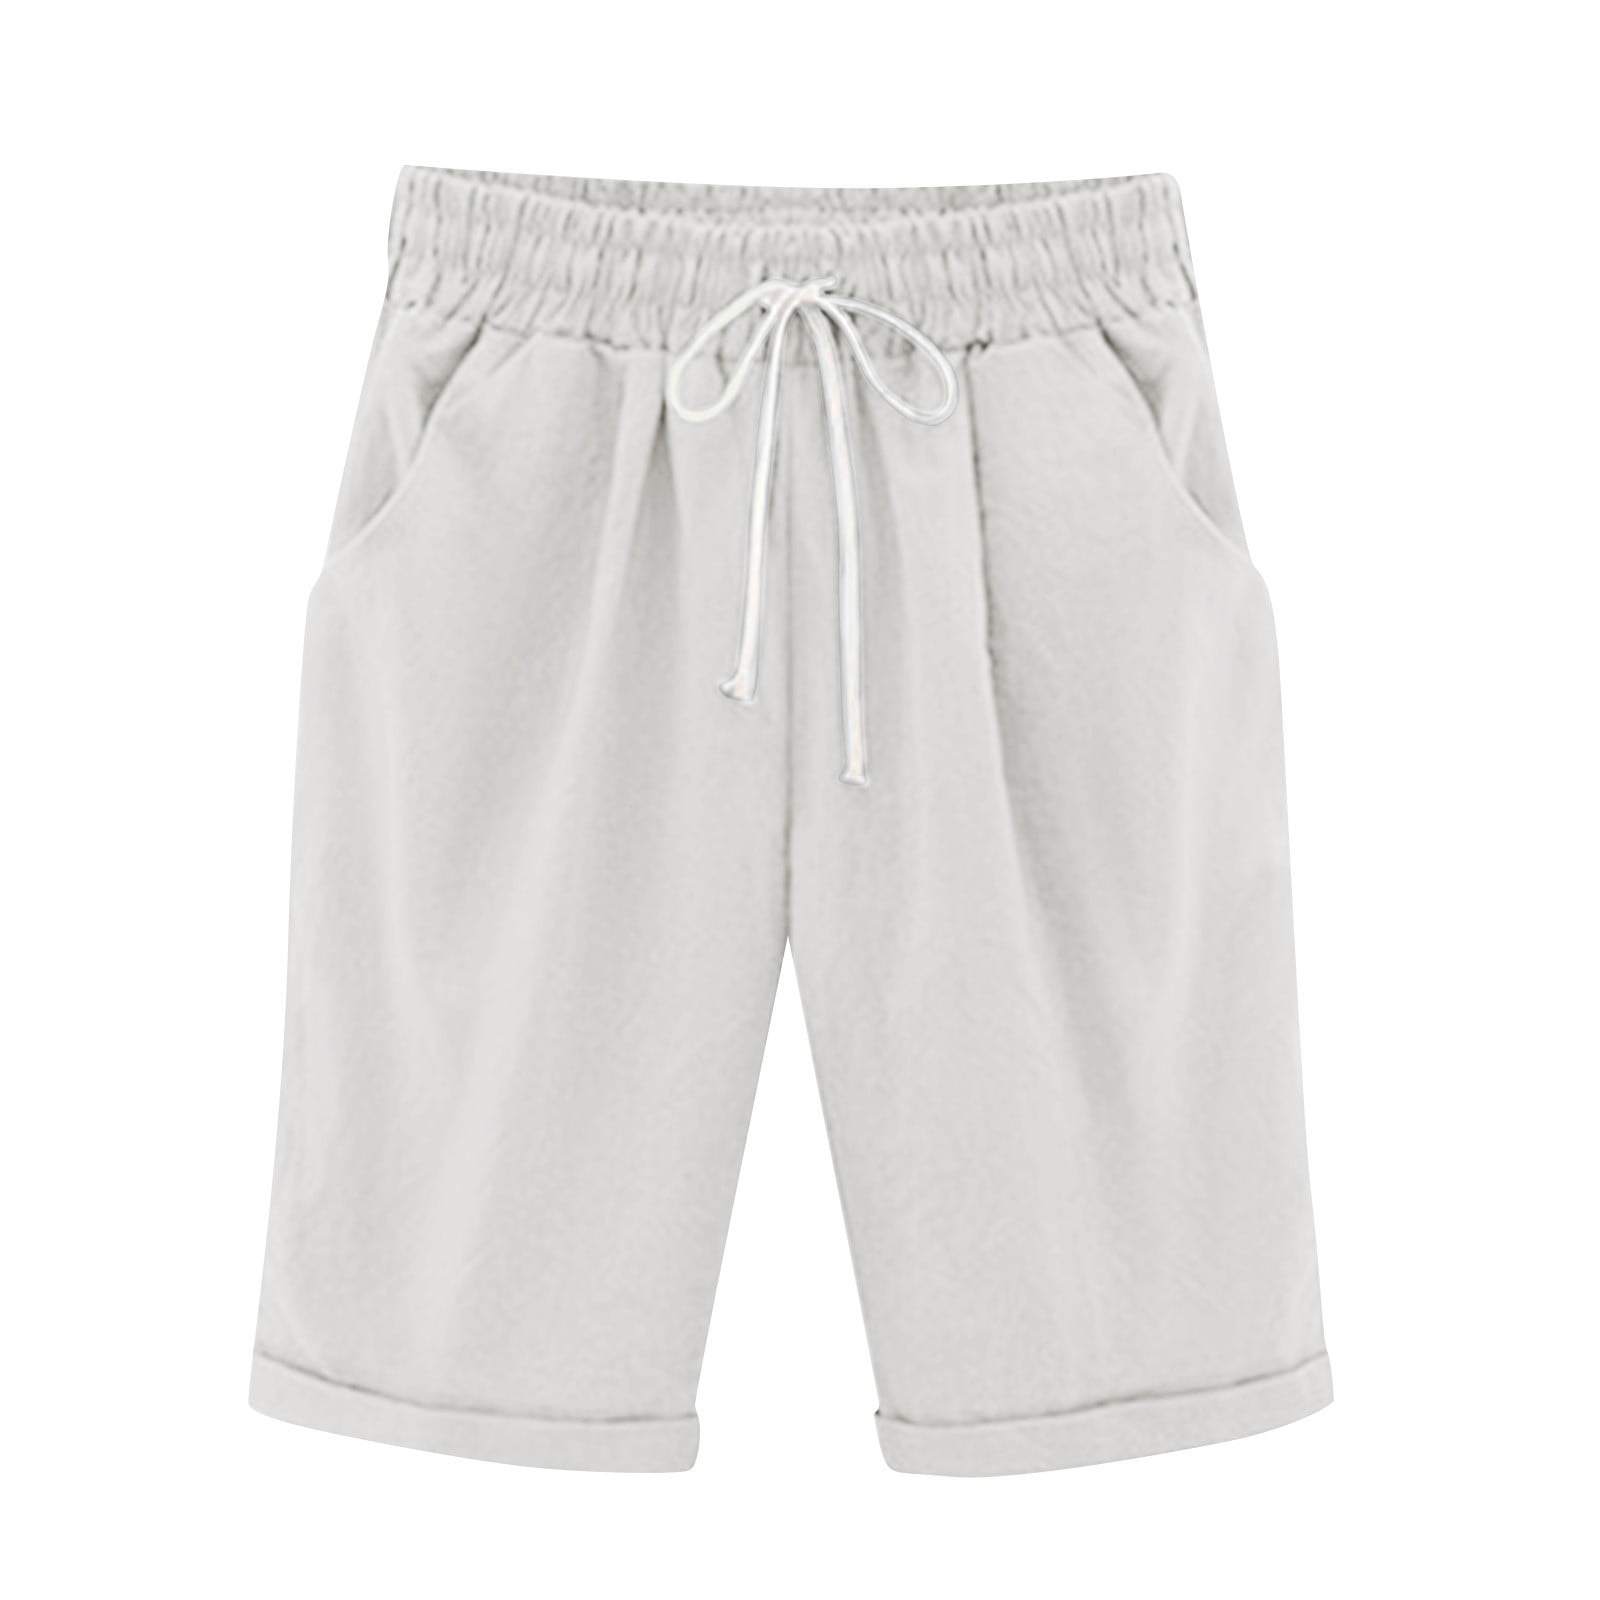 Hot in Summer!! HHEN Women's Shorts, French Terry Bermuda Pocket Shorts ...